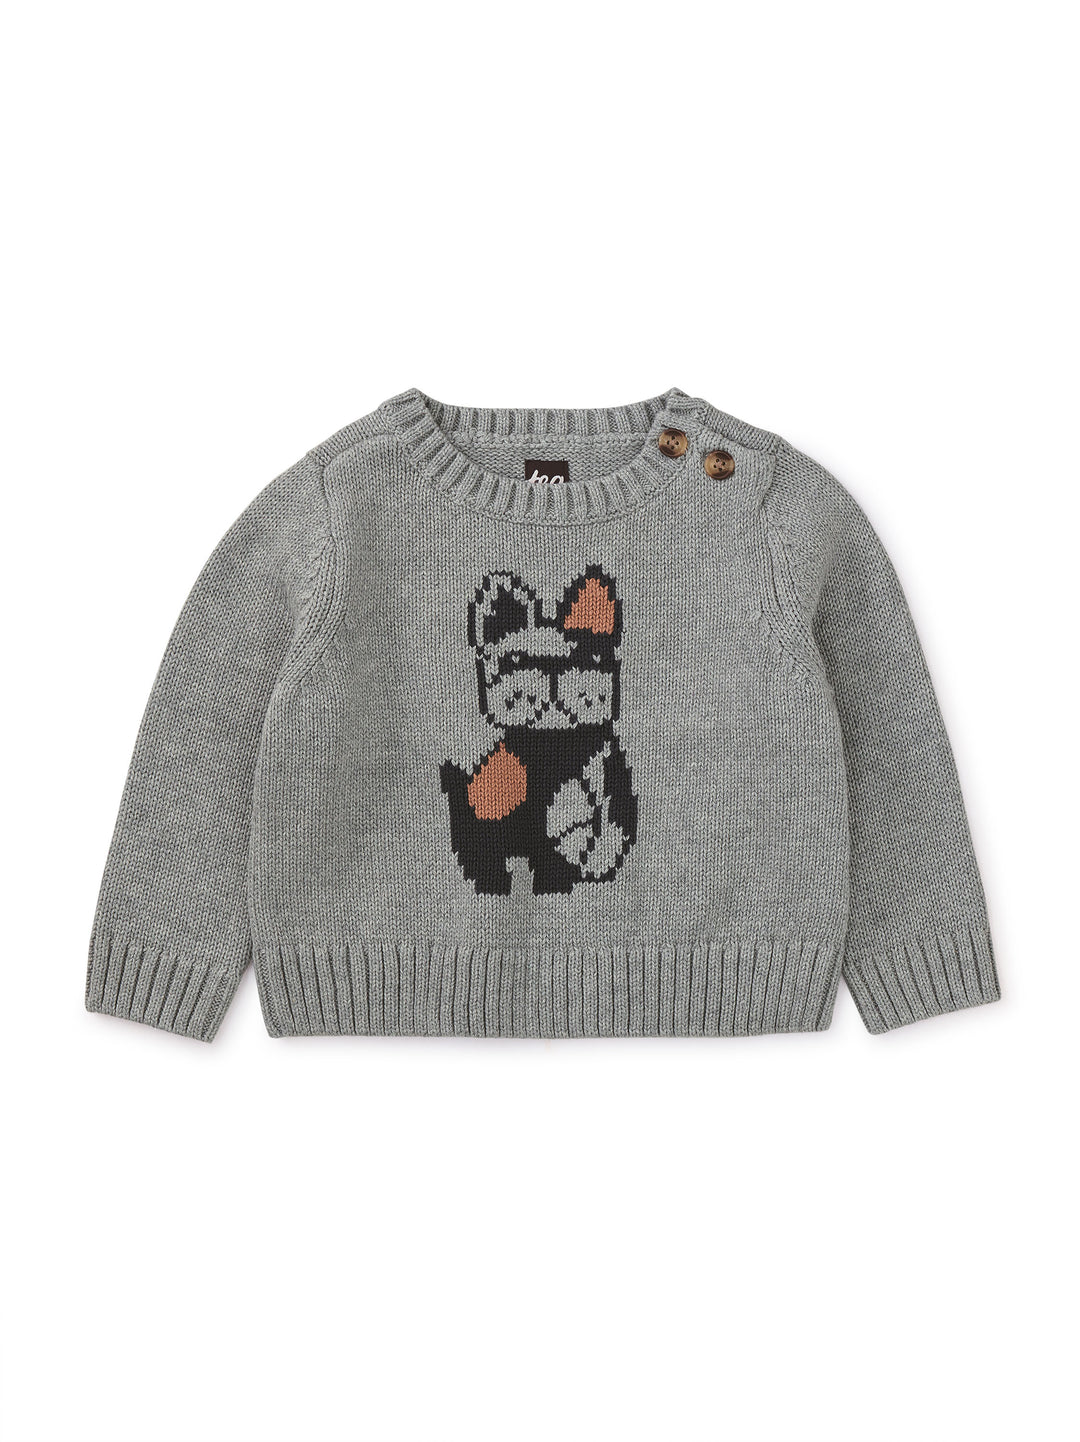 Tea Collection Frenchie Sweater, Medium Heather Gray |Mockingbird Baby & Kids